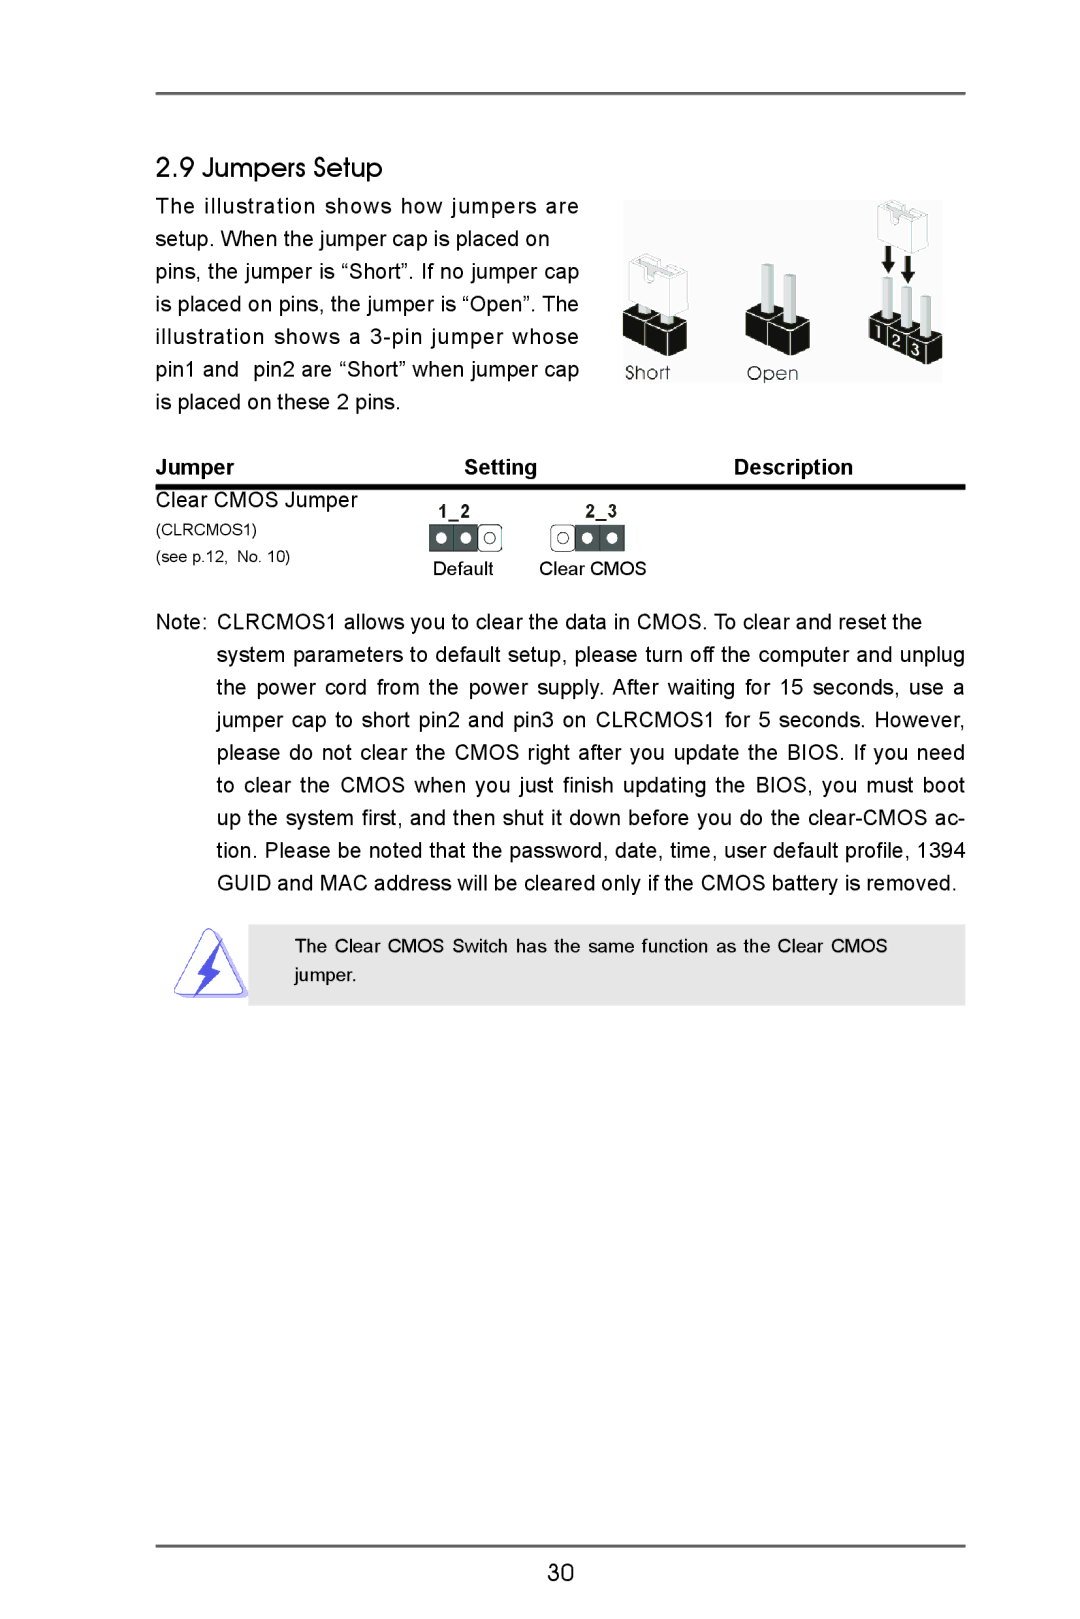 ASRock A75 Pro4/MVP manual Jumpers Setup, Description 